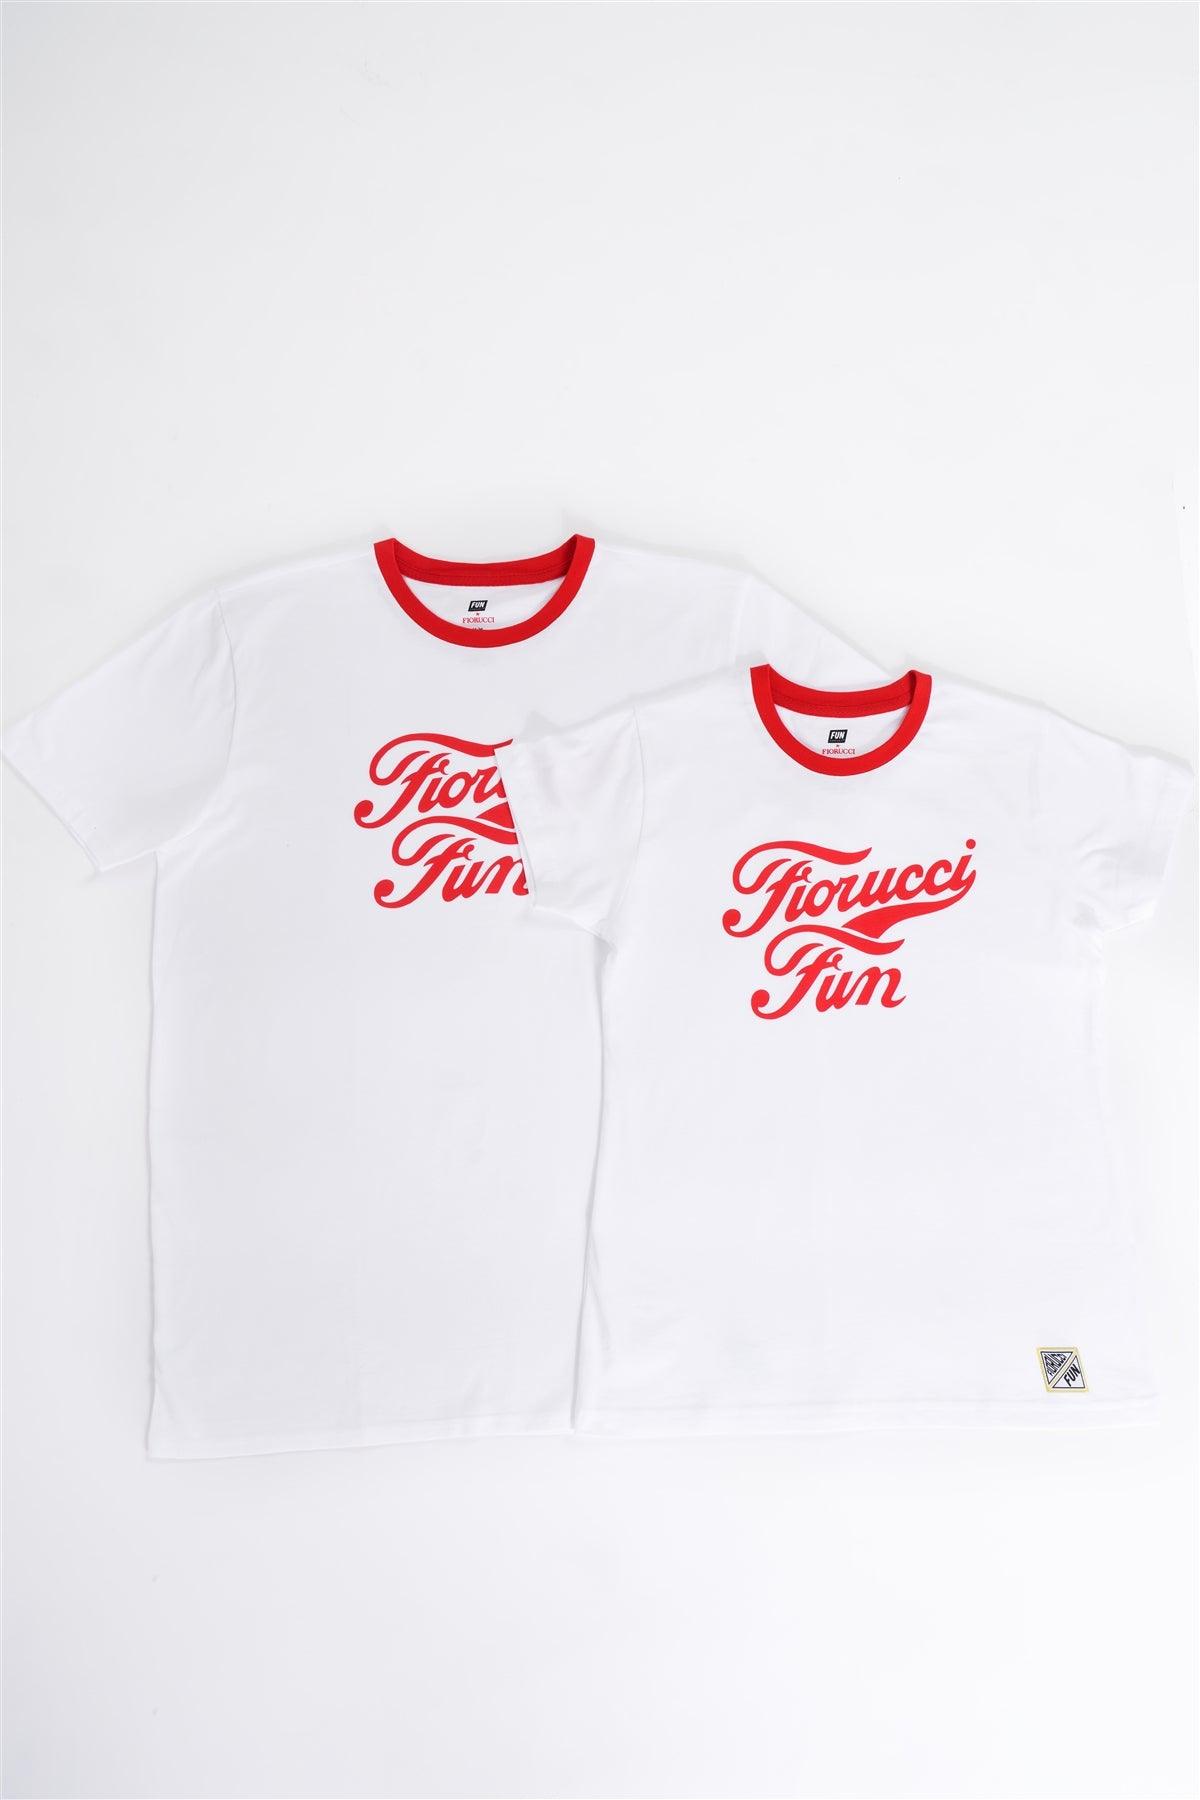 Fiorucci Fun Men's White & Red Printed Logo T-Shirt For Him /2-1-1